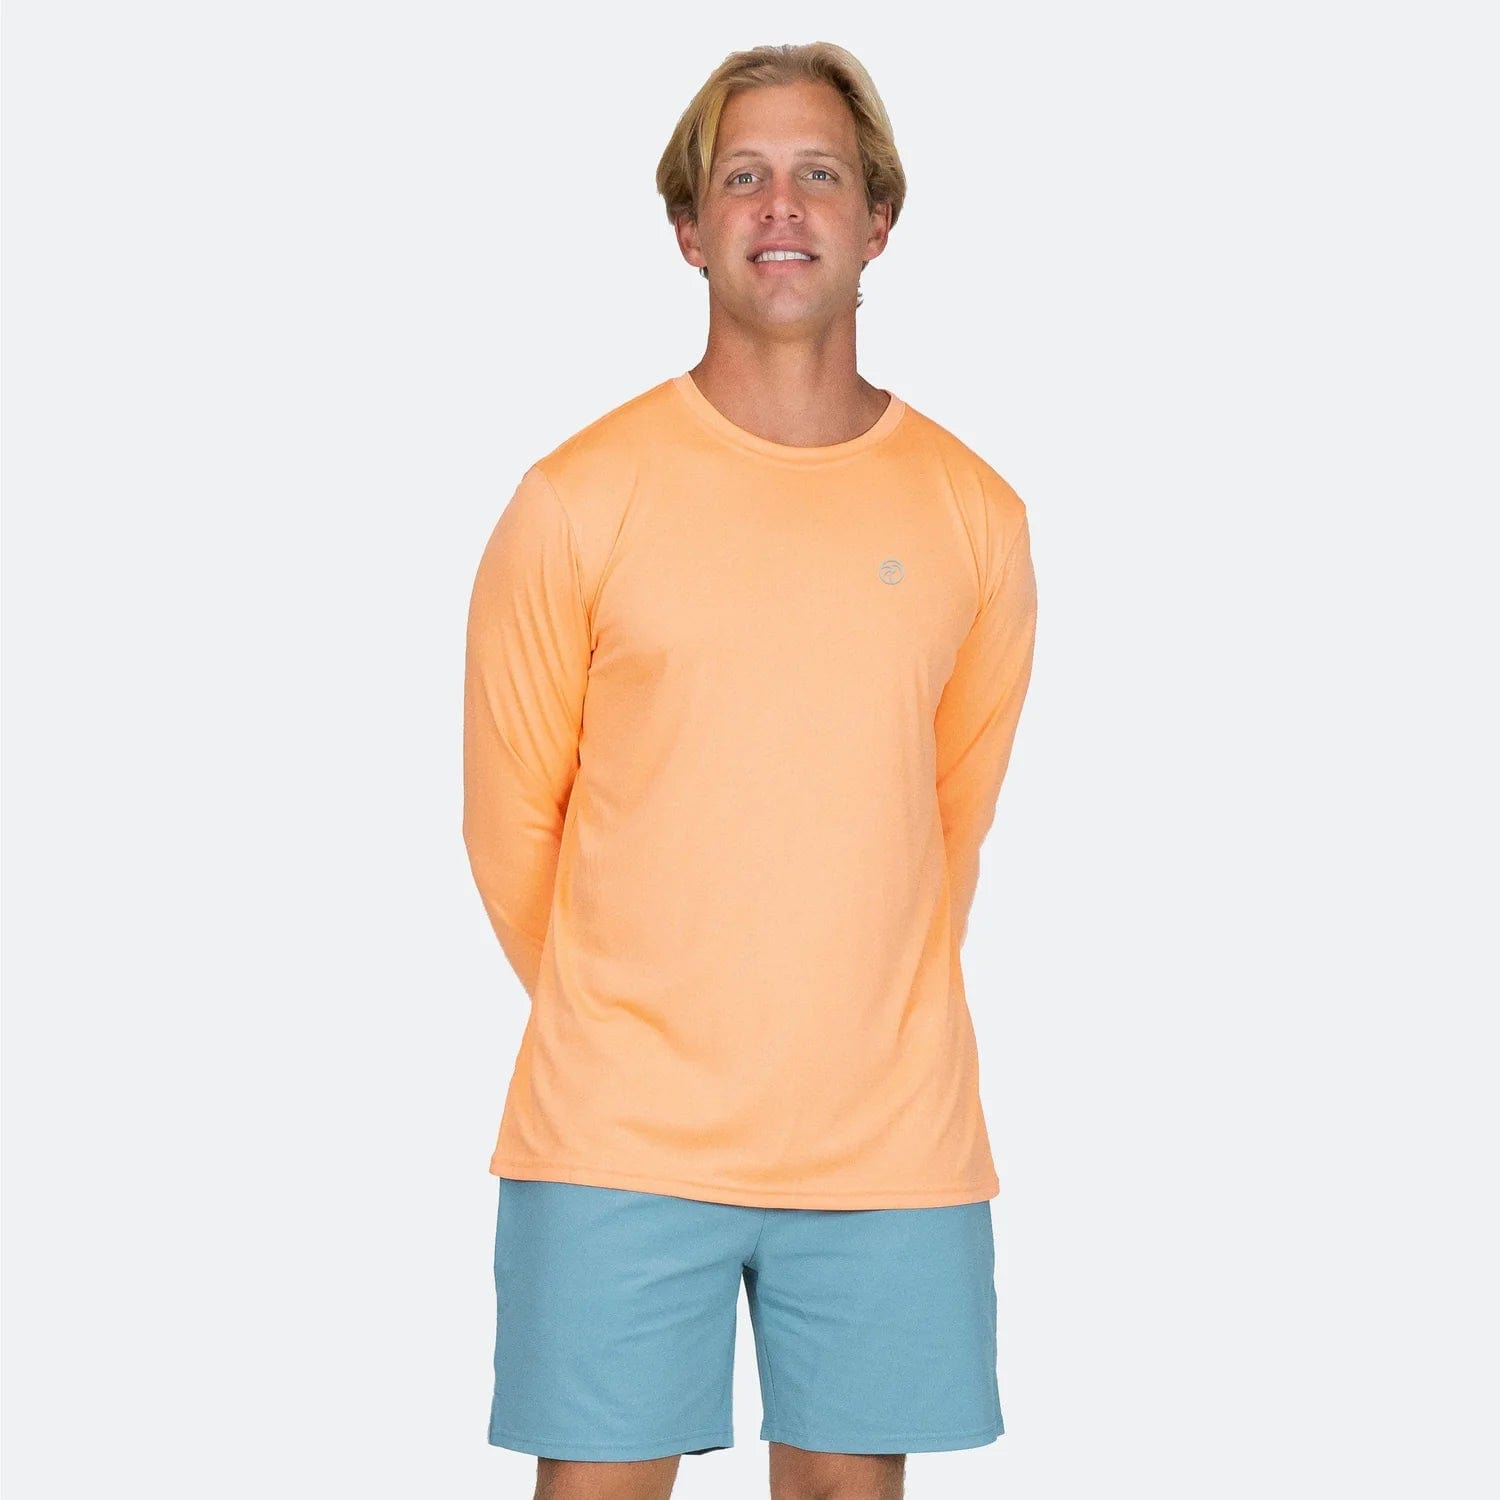 Mossy Oak Men's Standard Sun Shirts UV Protection Long Sleeve